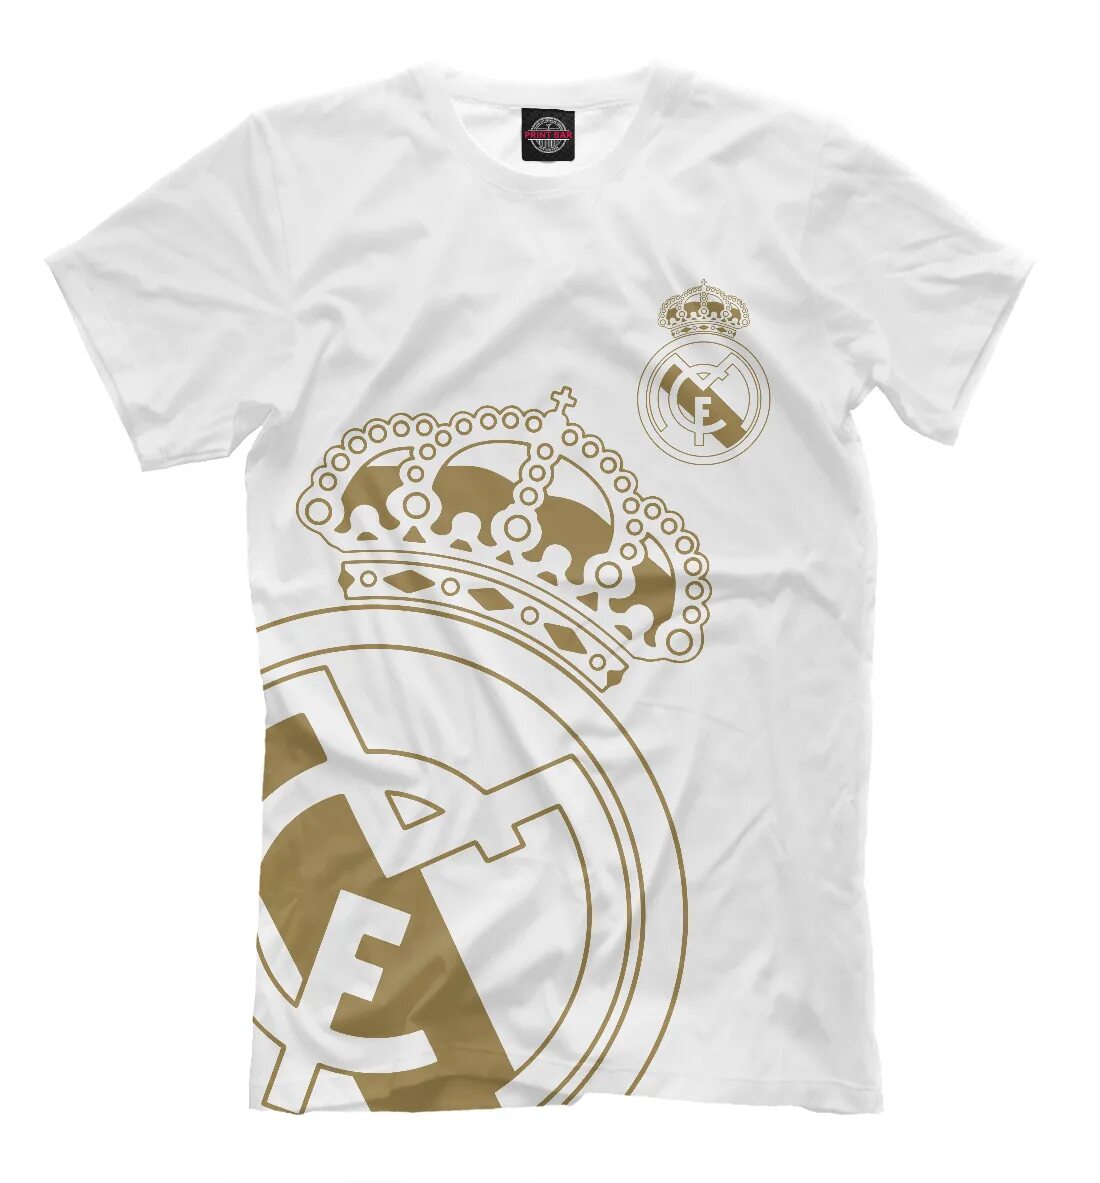 Купить футболку реал. Футболка real Madrid. Майка Реал Мадрид оригинал. Футболка Реал Мадрид черная. Футболка Golds.